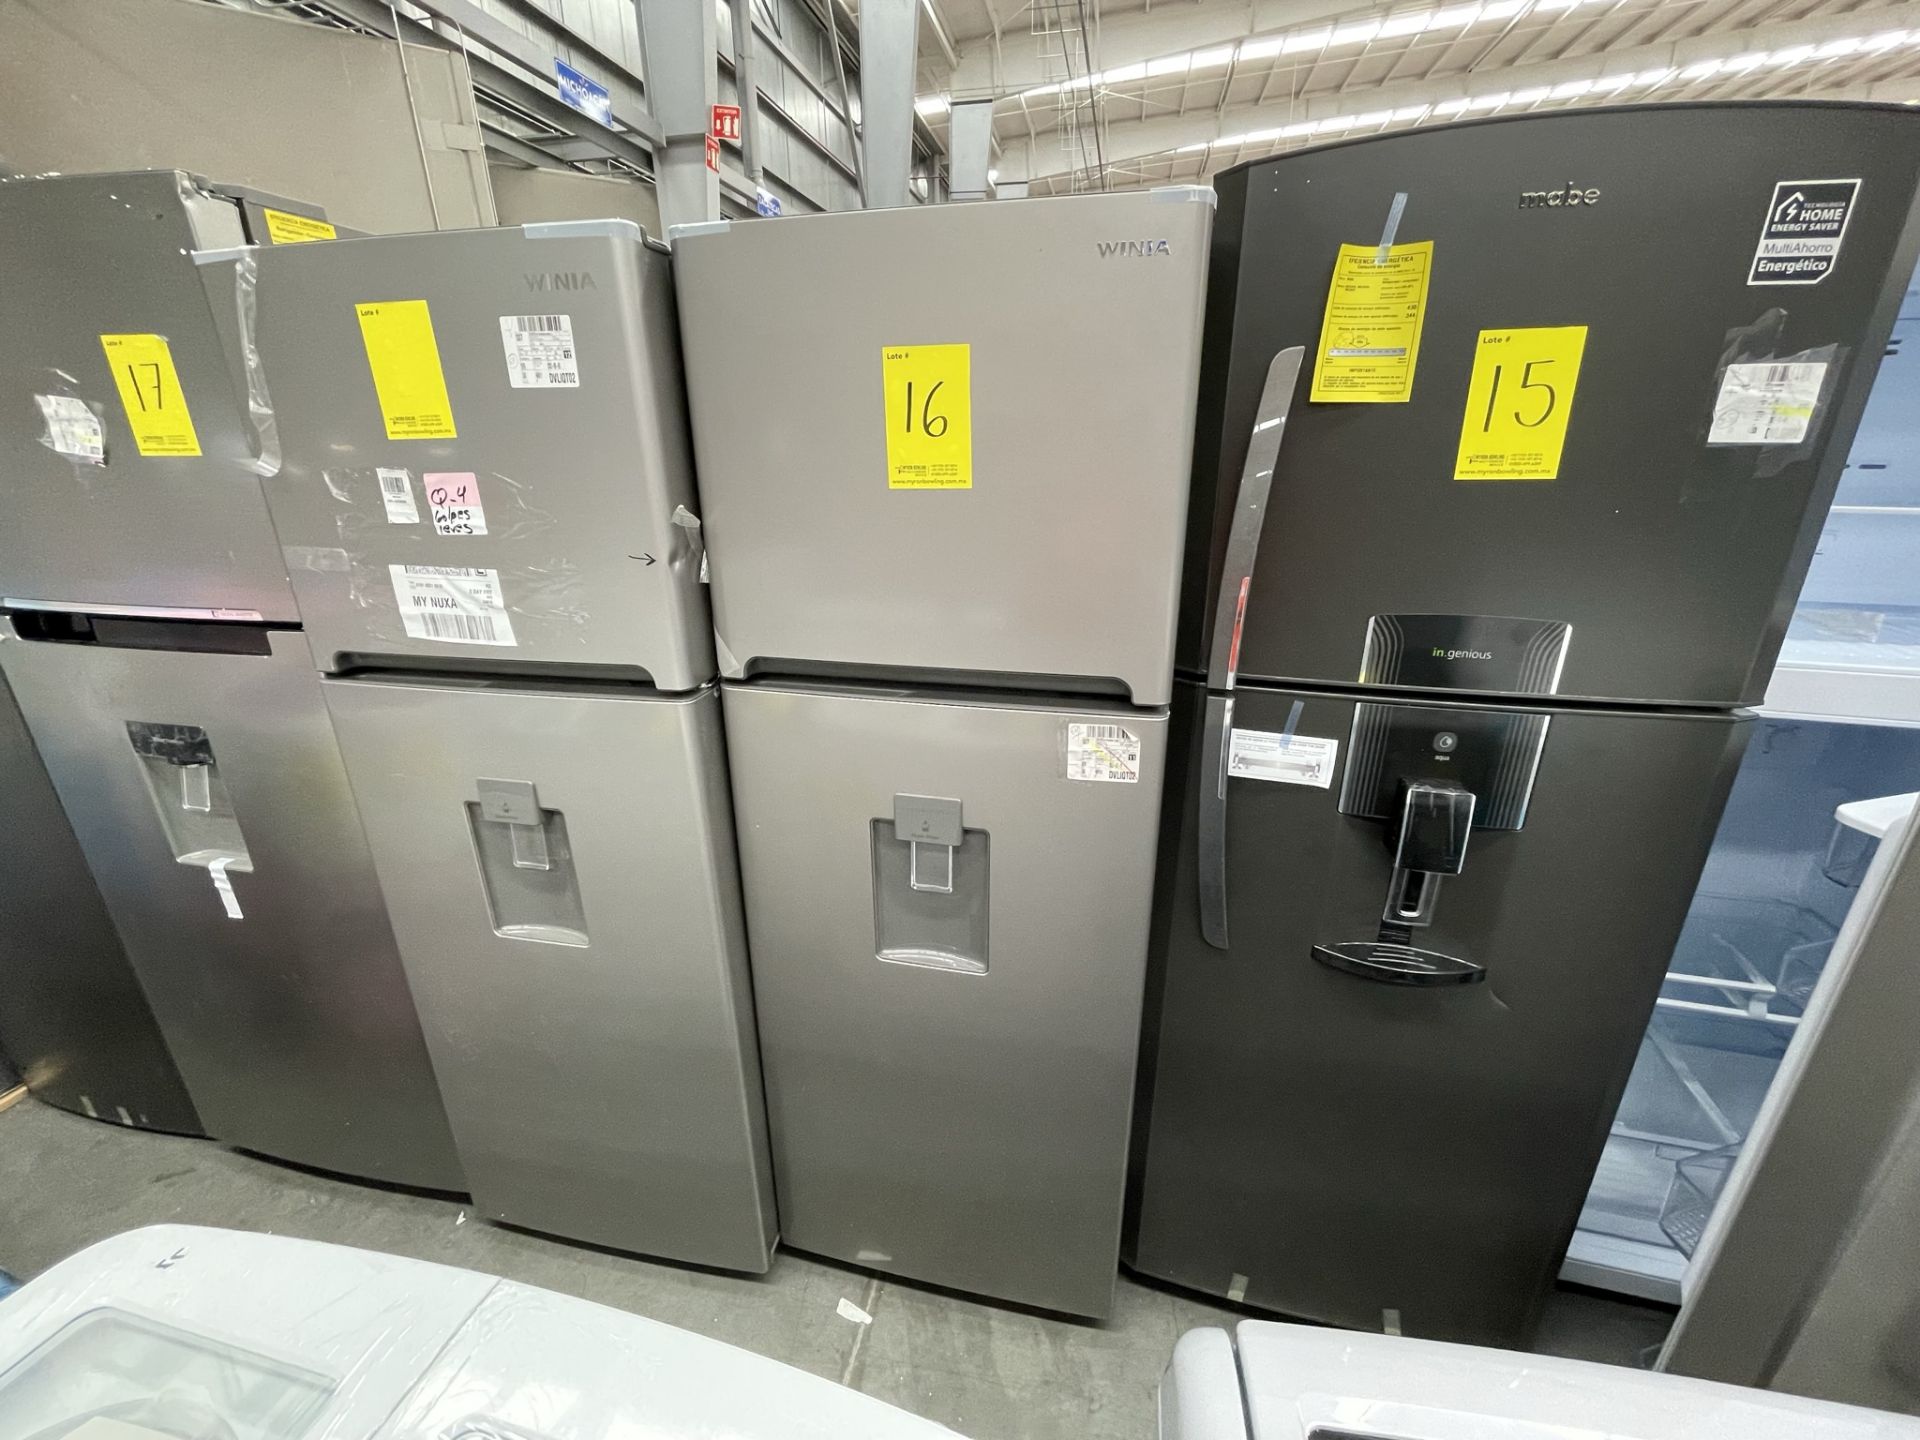 (EQUIPO NUEVO) 1 Refrigerador Con Dispensador De Agua Marca WINIA, Modelo DFR32210GMDX, Serie 85006 - Image 2 of 8